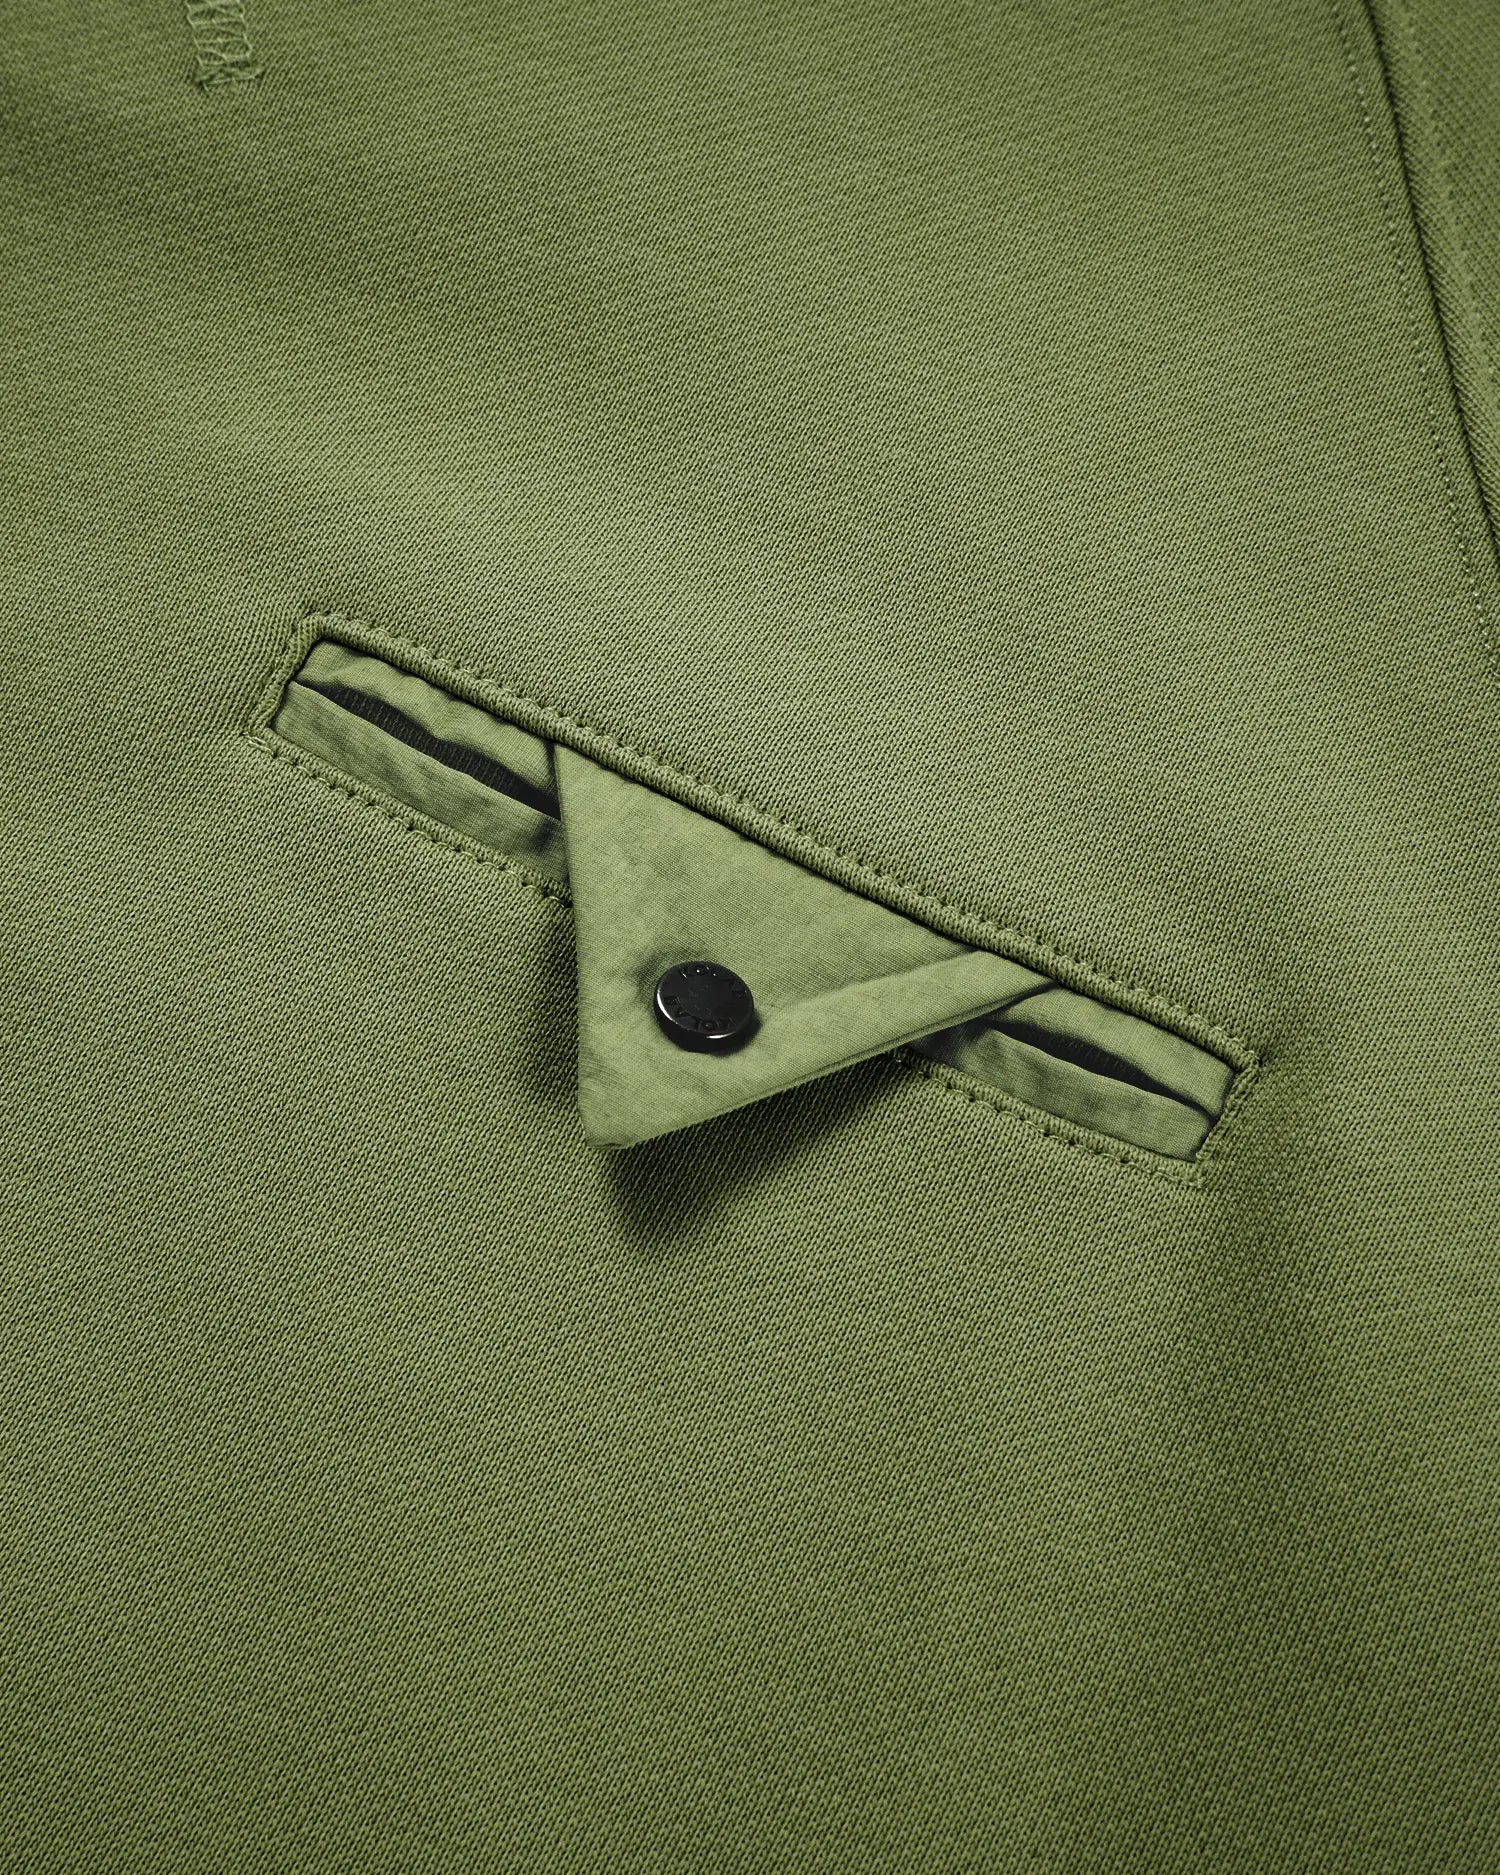 Women's Mixed Fabric Crew Sweatshirt in Military Green 03 #military-green